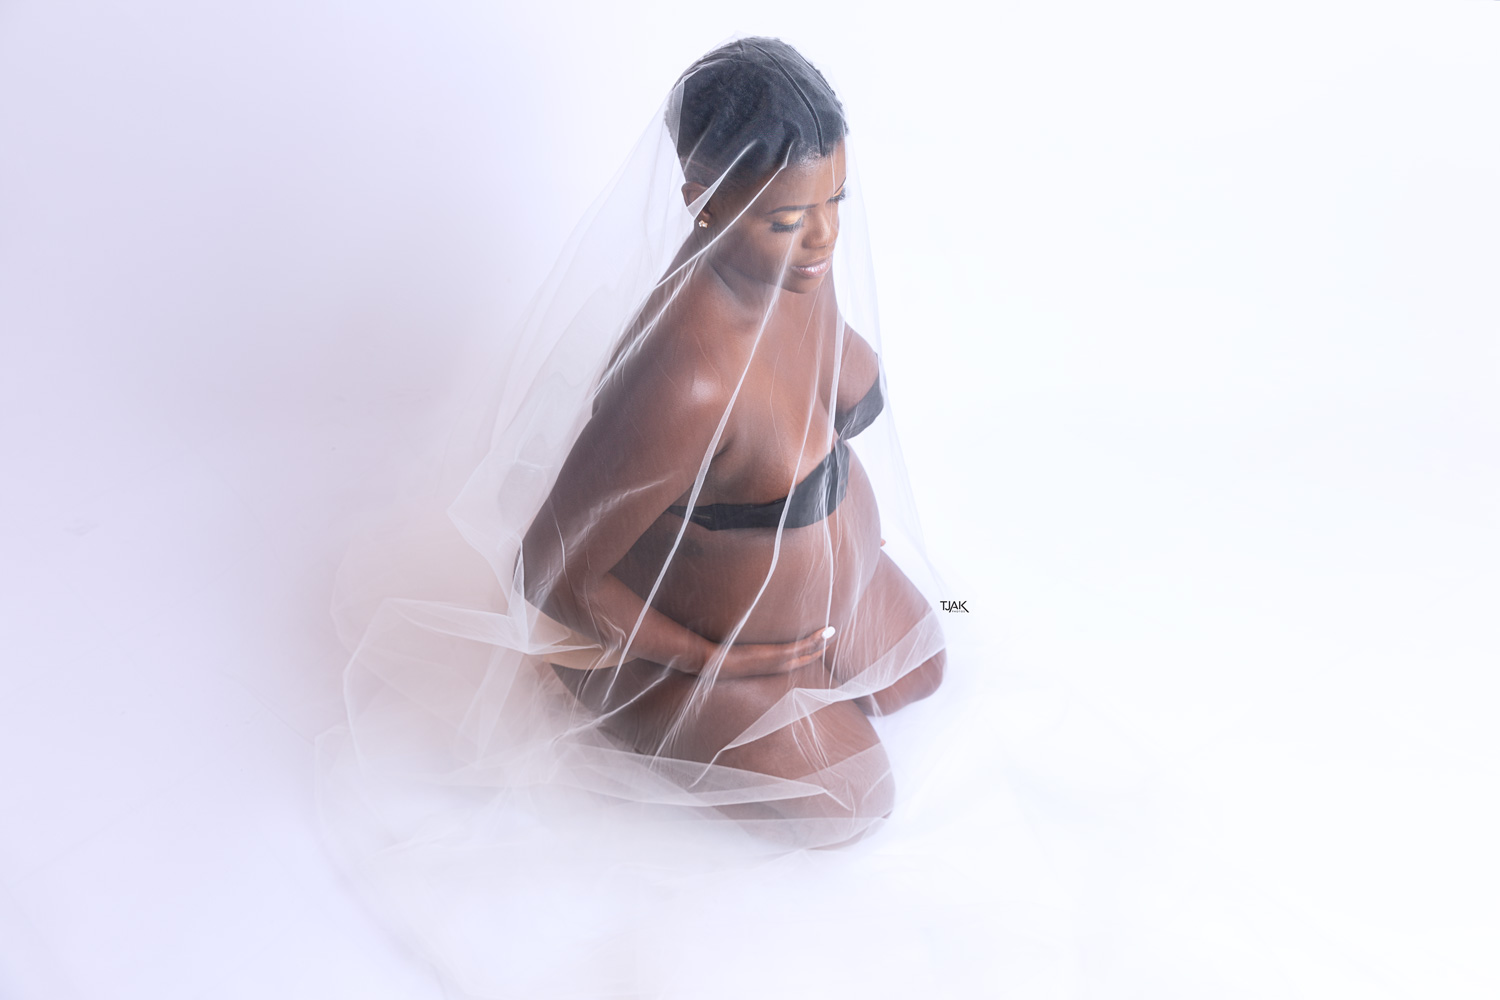 Maternity Photographer - TjakPhotos, Laurel, Maryland